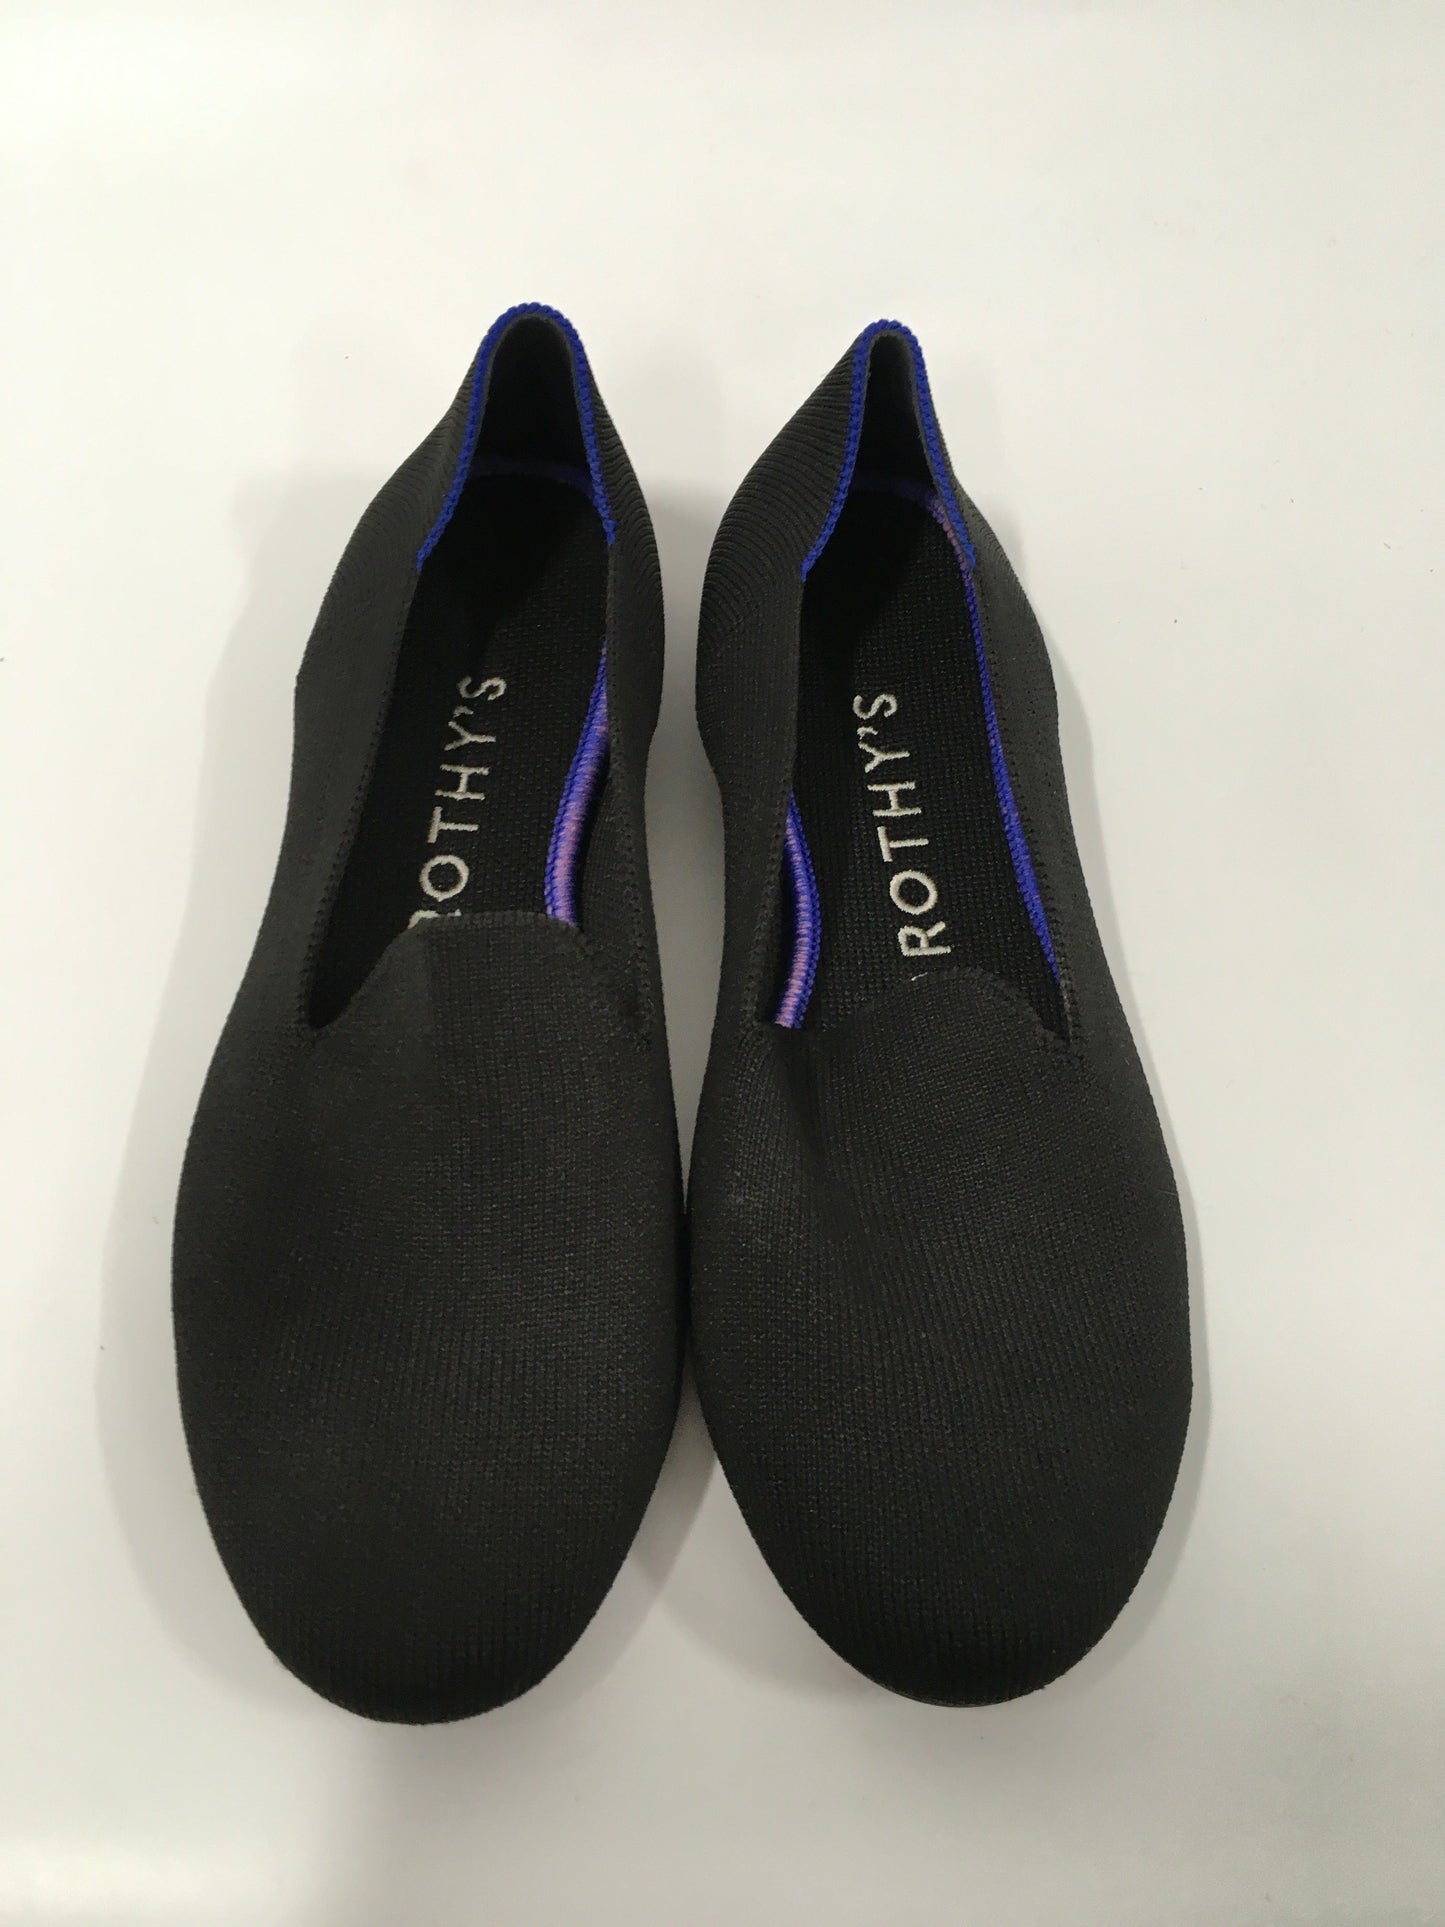 Black Shoes Flats Ballet Rothys, Size 7